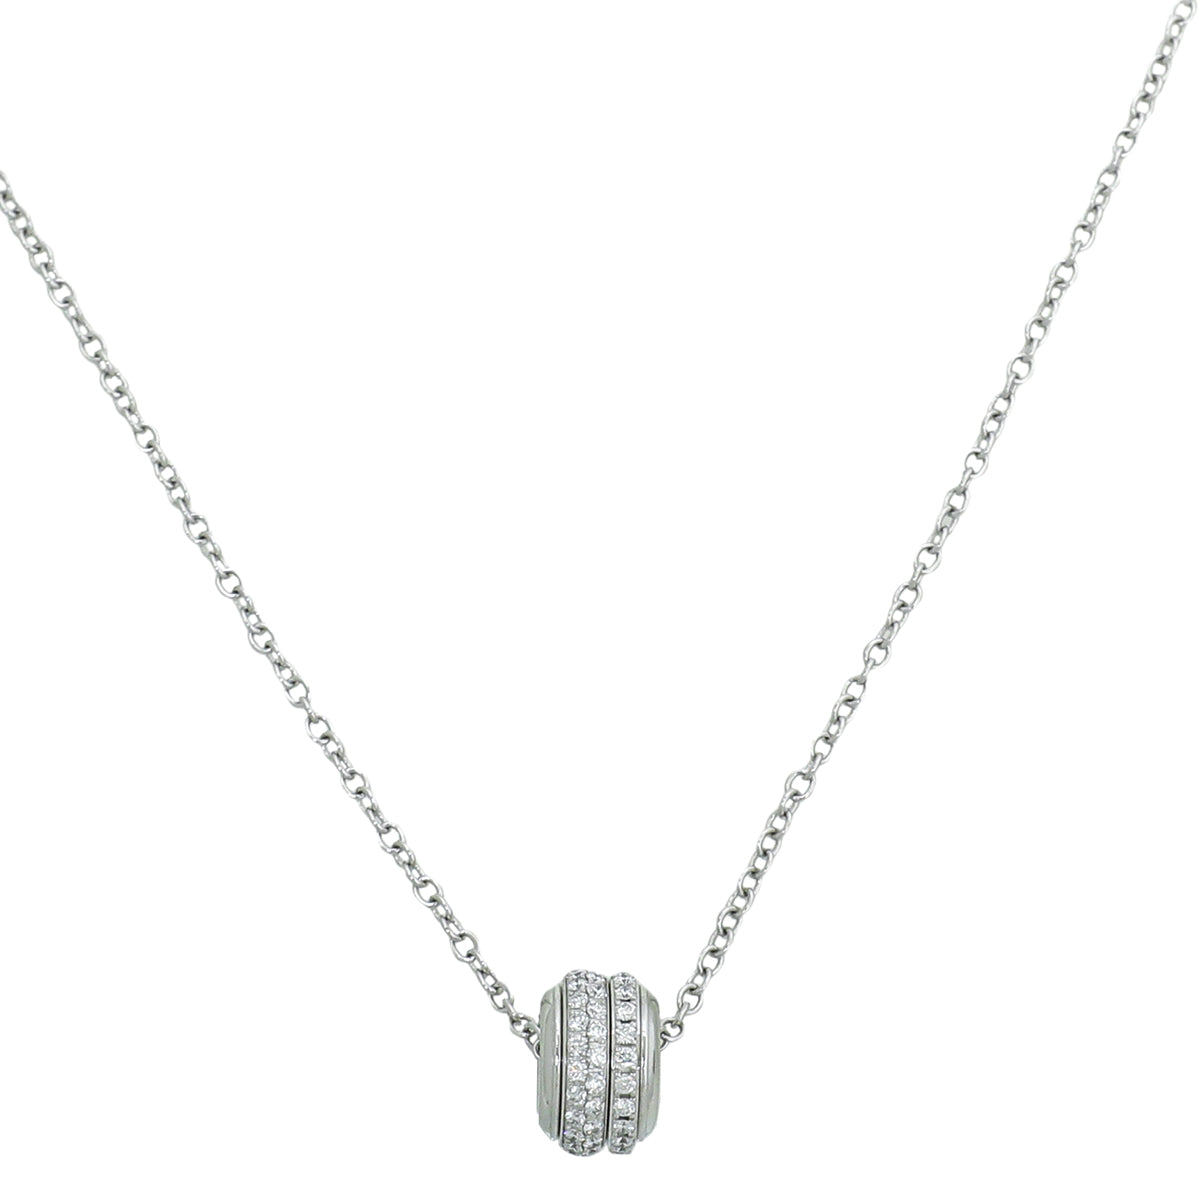 Piaget 18K White Gold Diamond Possession Pendant Necklace